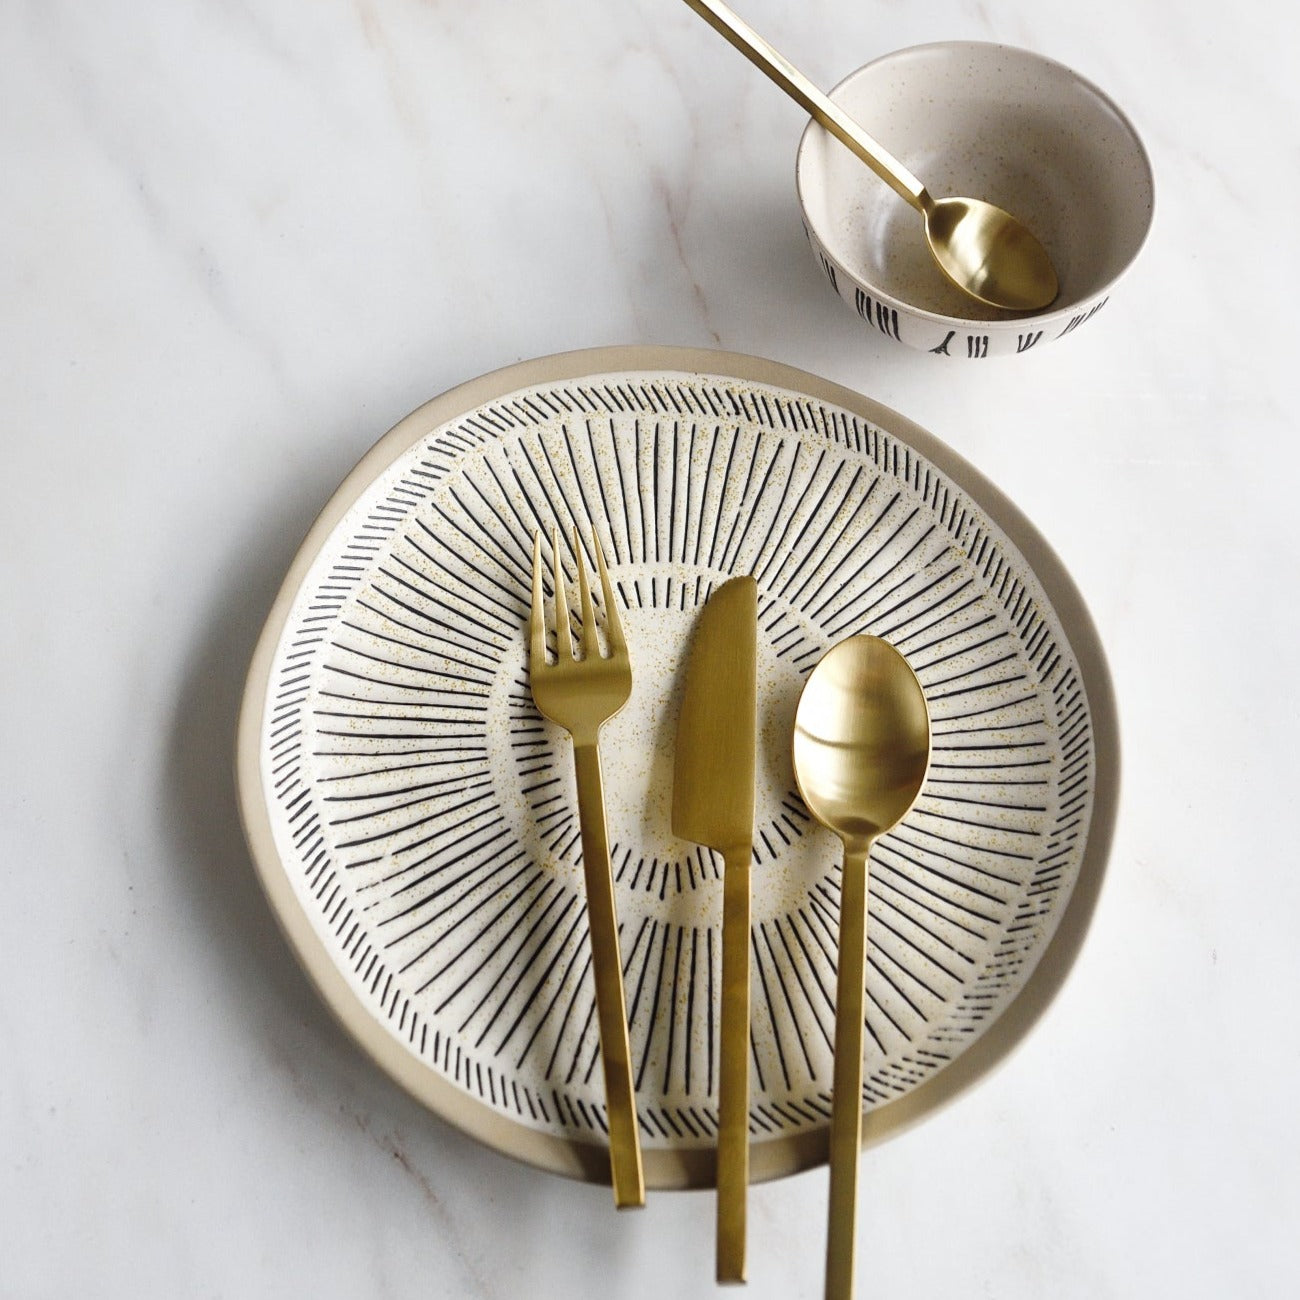 Bangkok Set of Cutlery - Gold